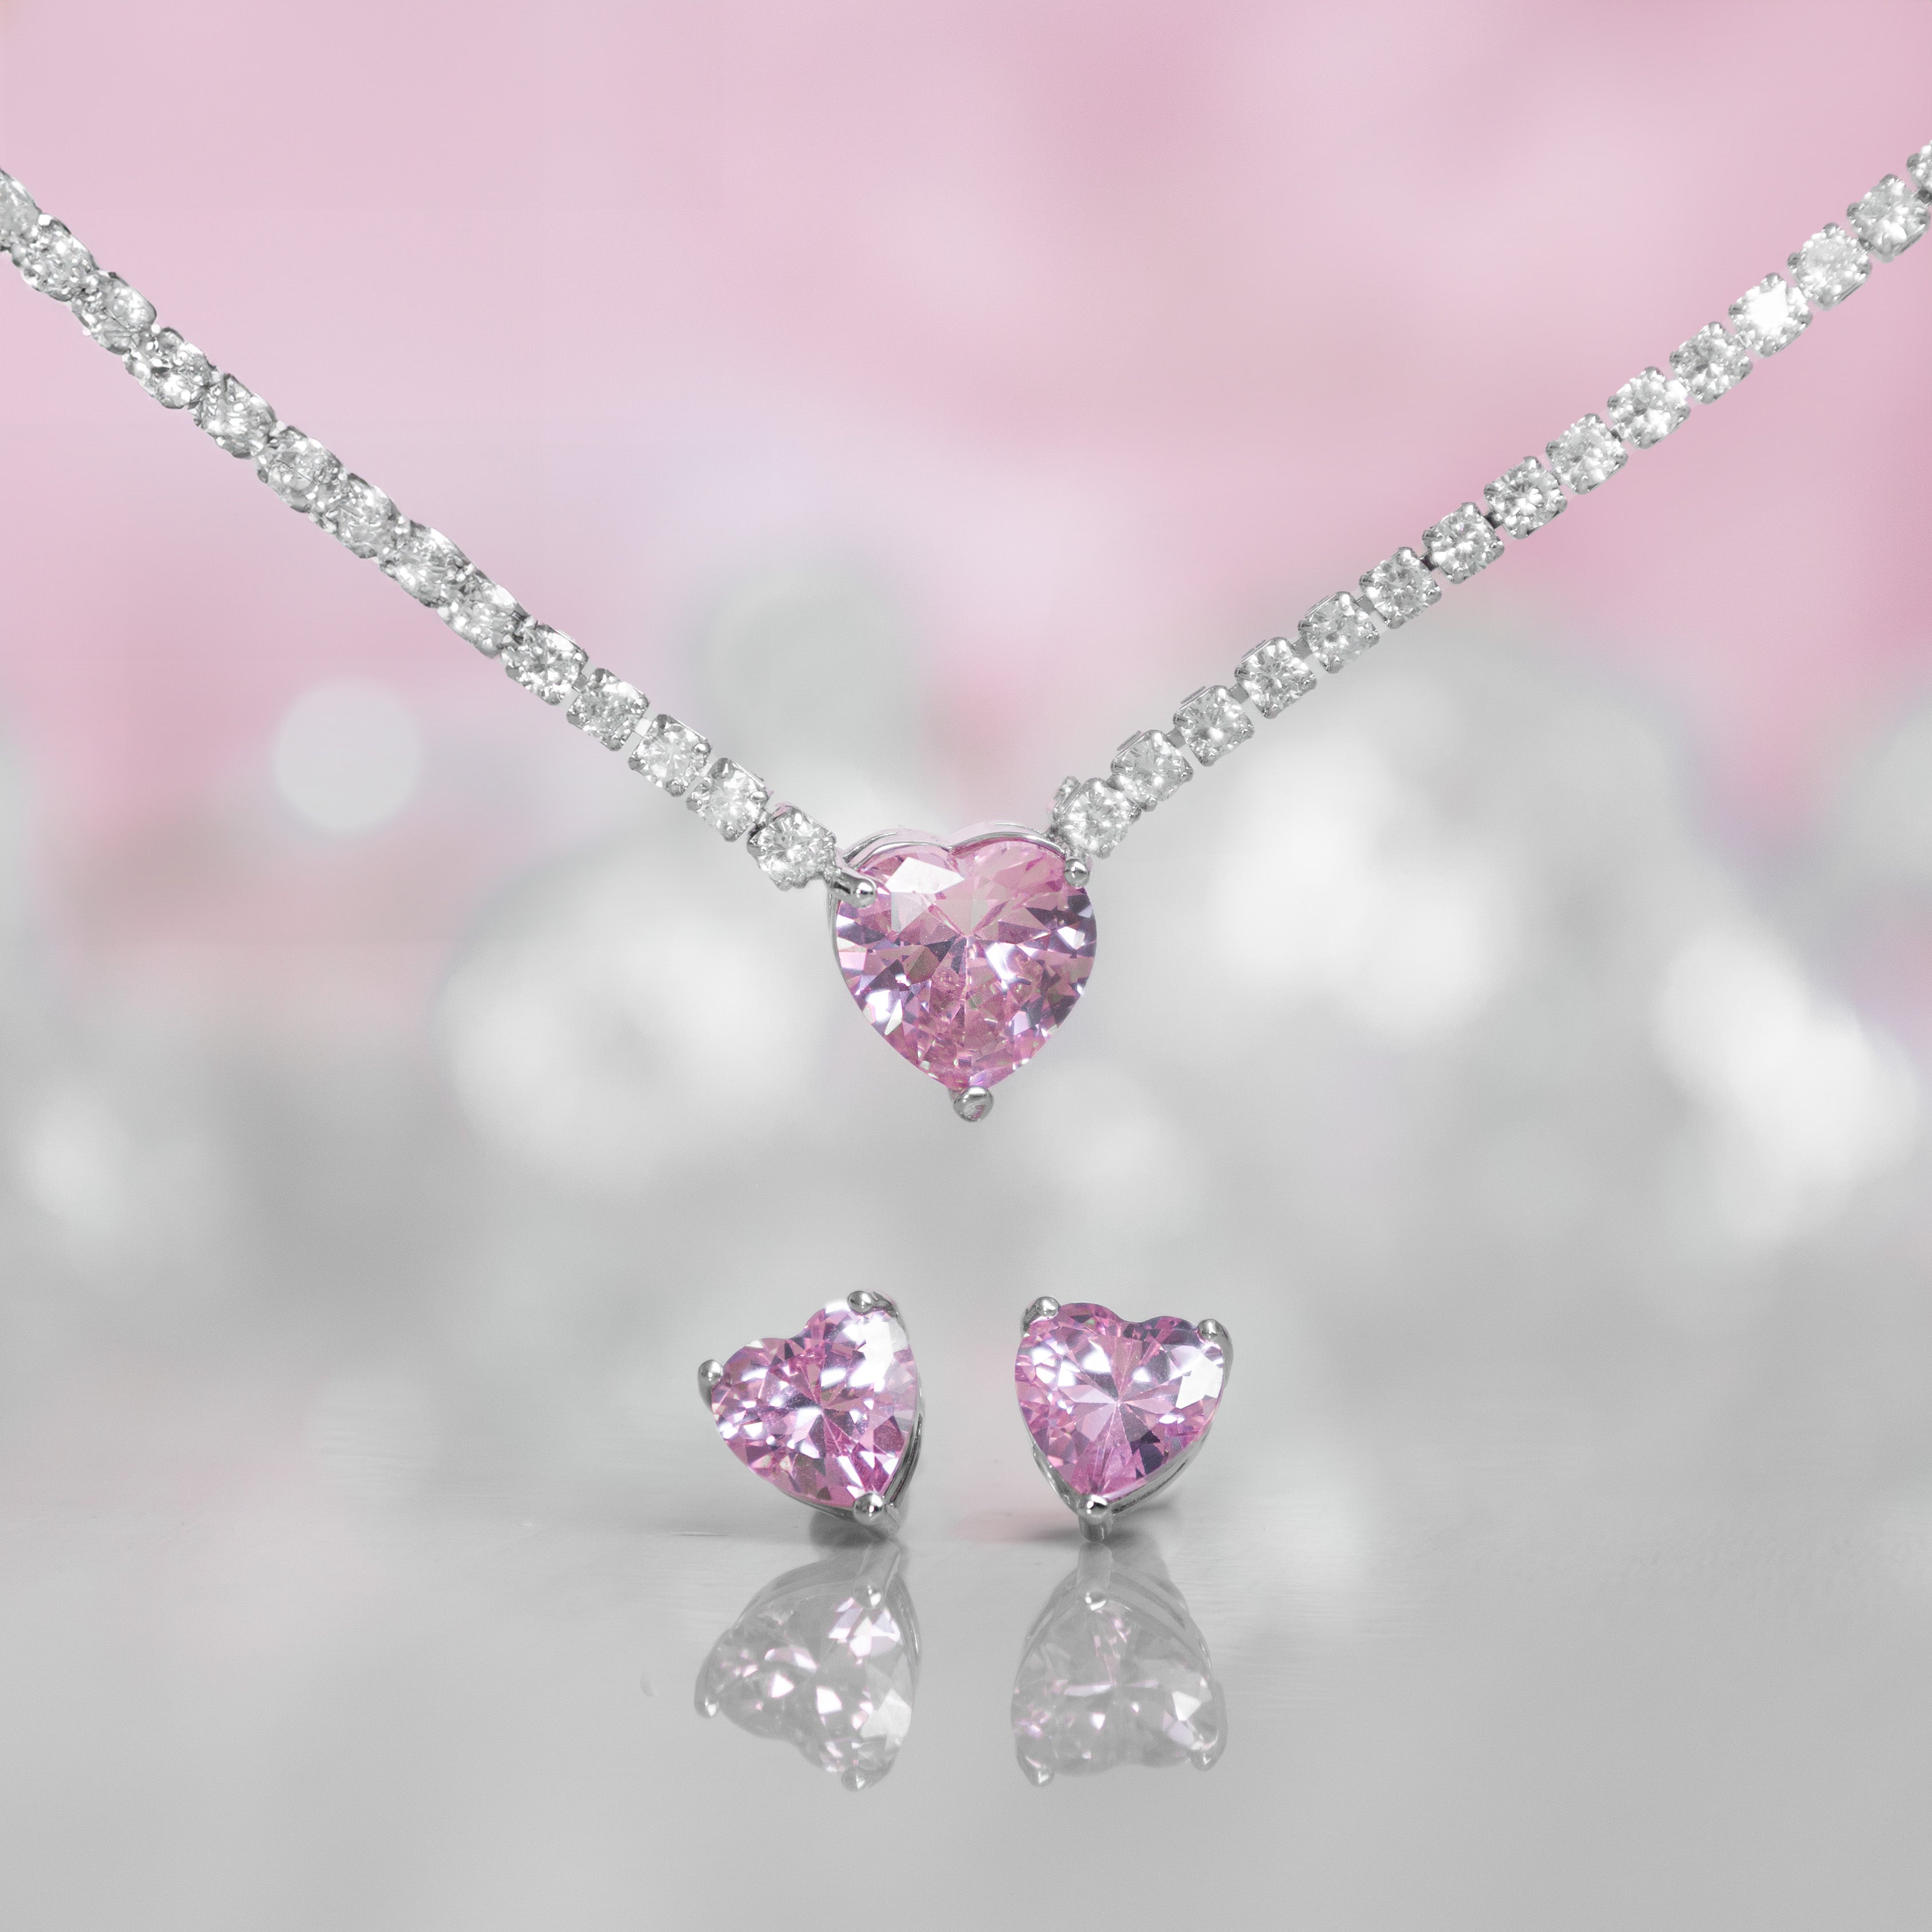 Loveheart necklace, heart earrings, pink heart jewellery, jewellery set, pink tennis necklace